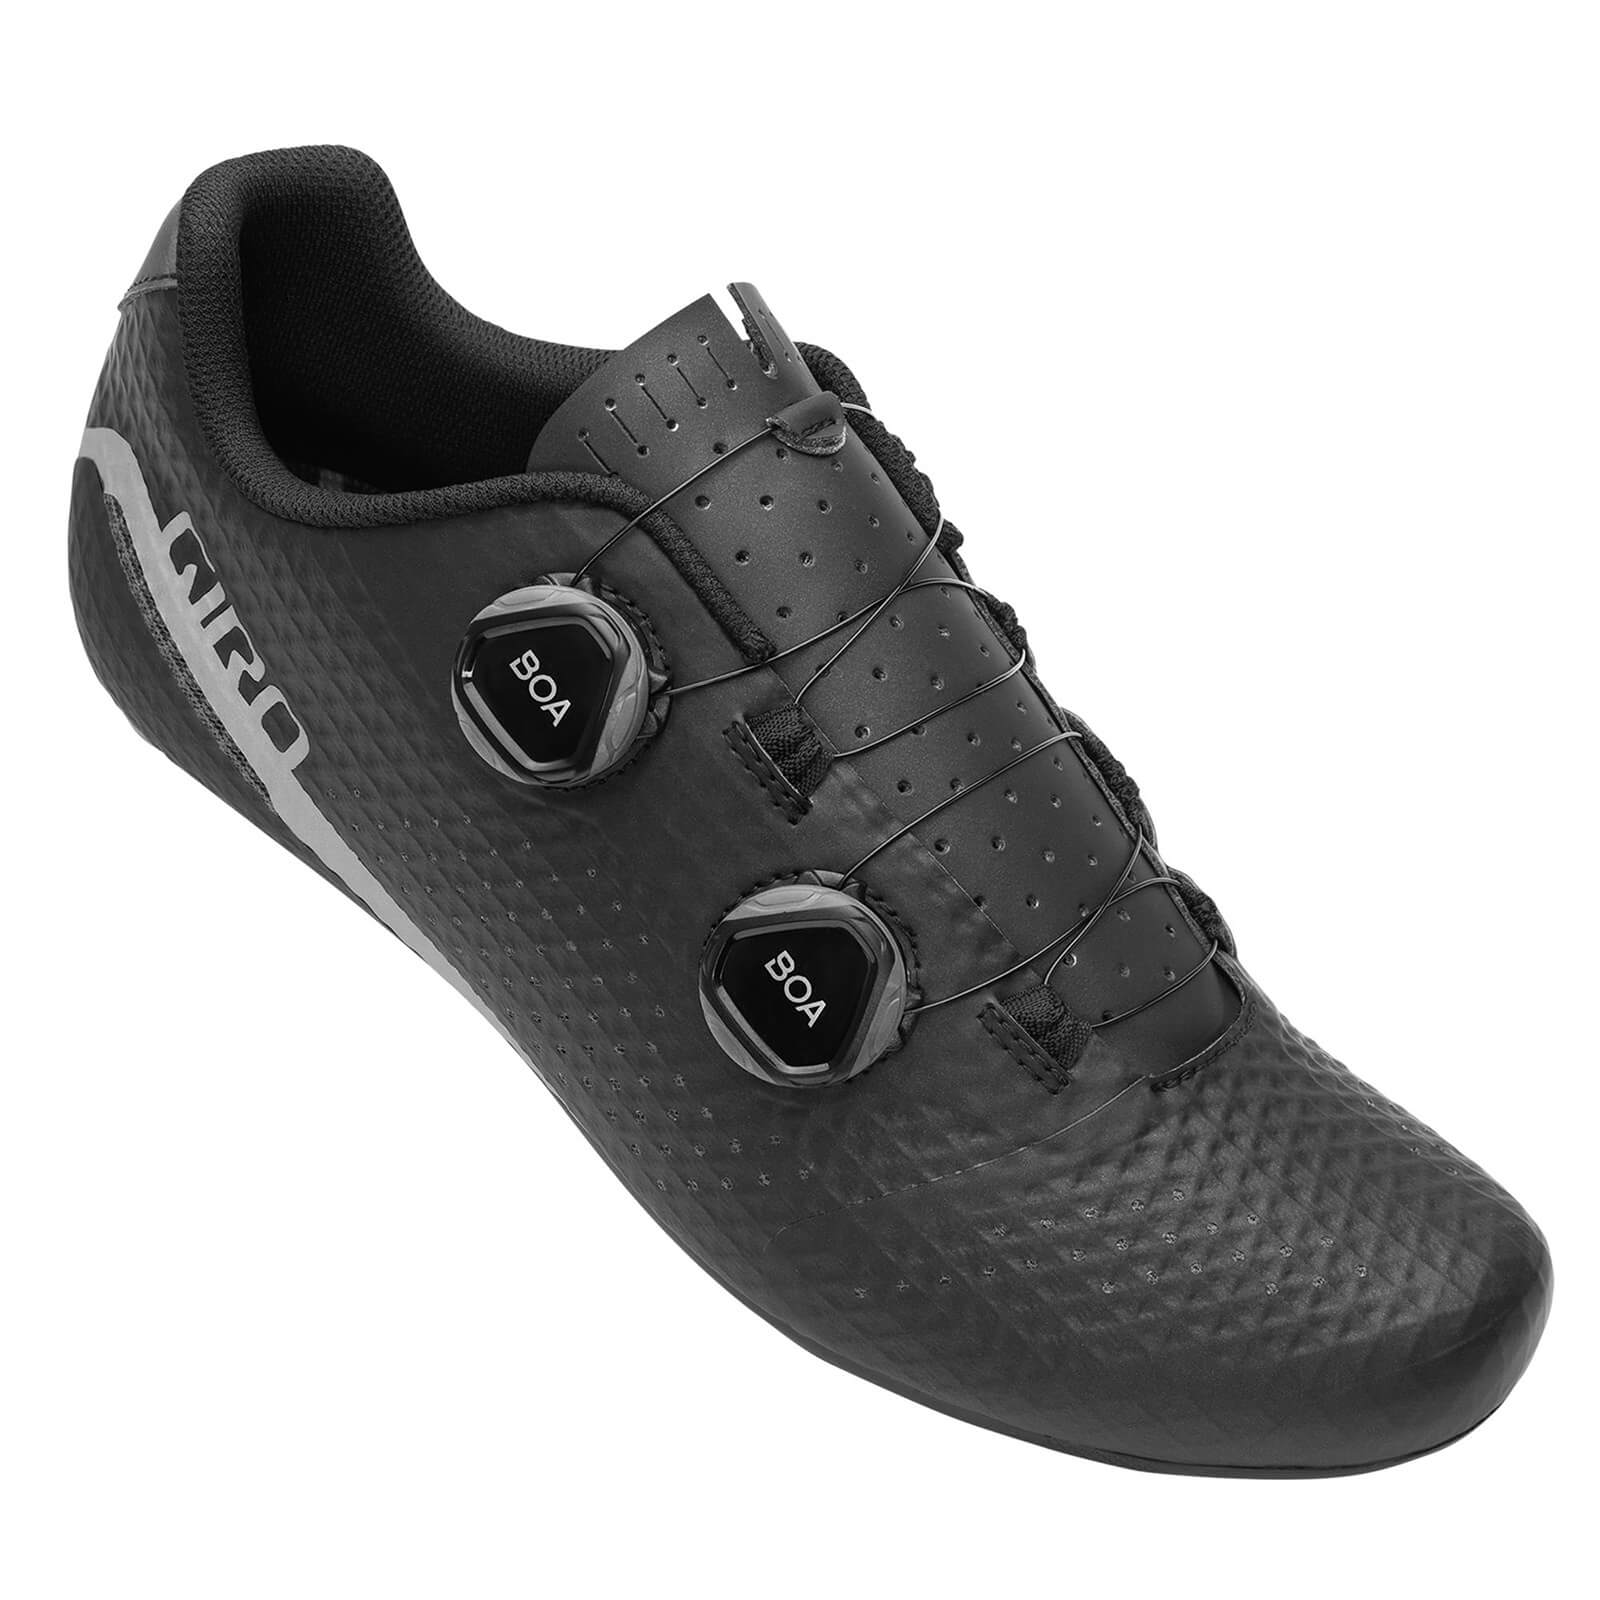 Giro Regime Road Shoes - EU 46 - Black